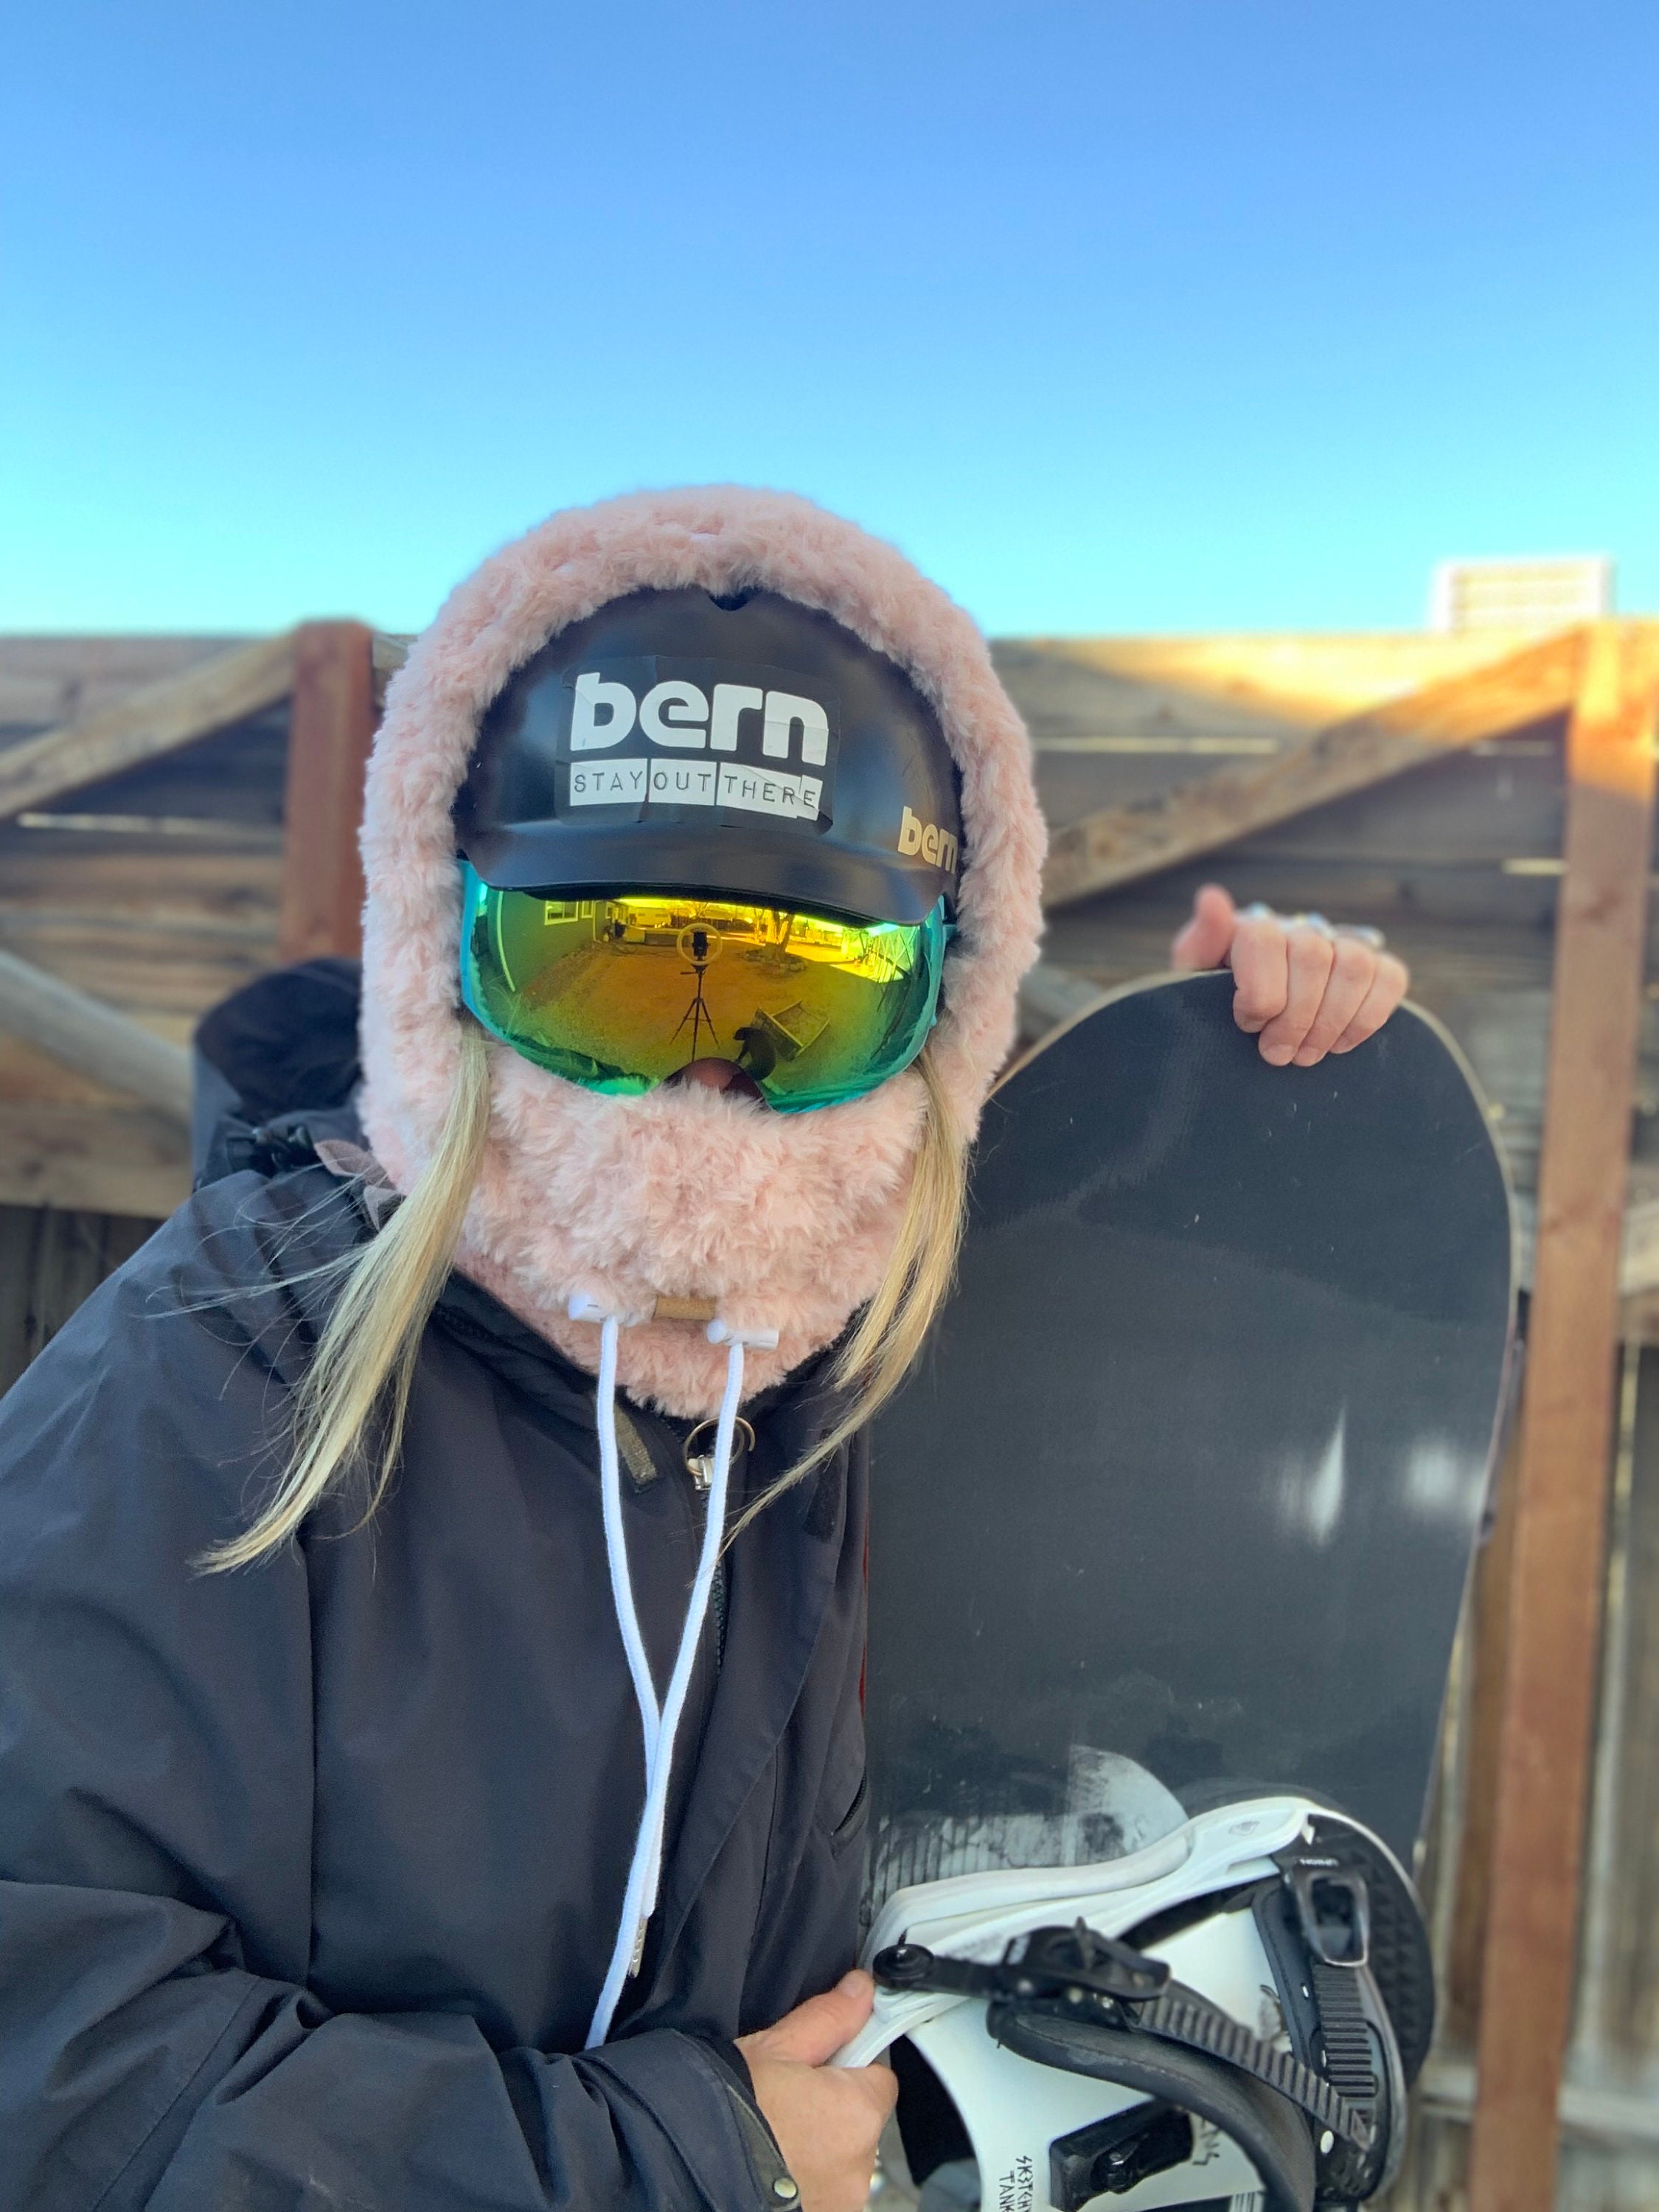 Masque de ski masque facial femmes cagoule polaire capuche hiver